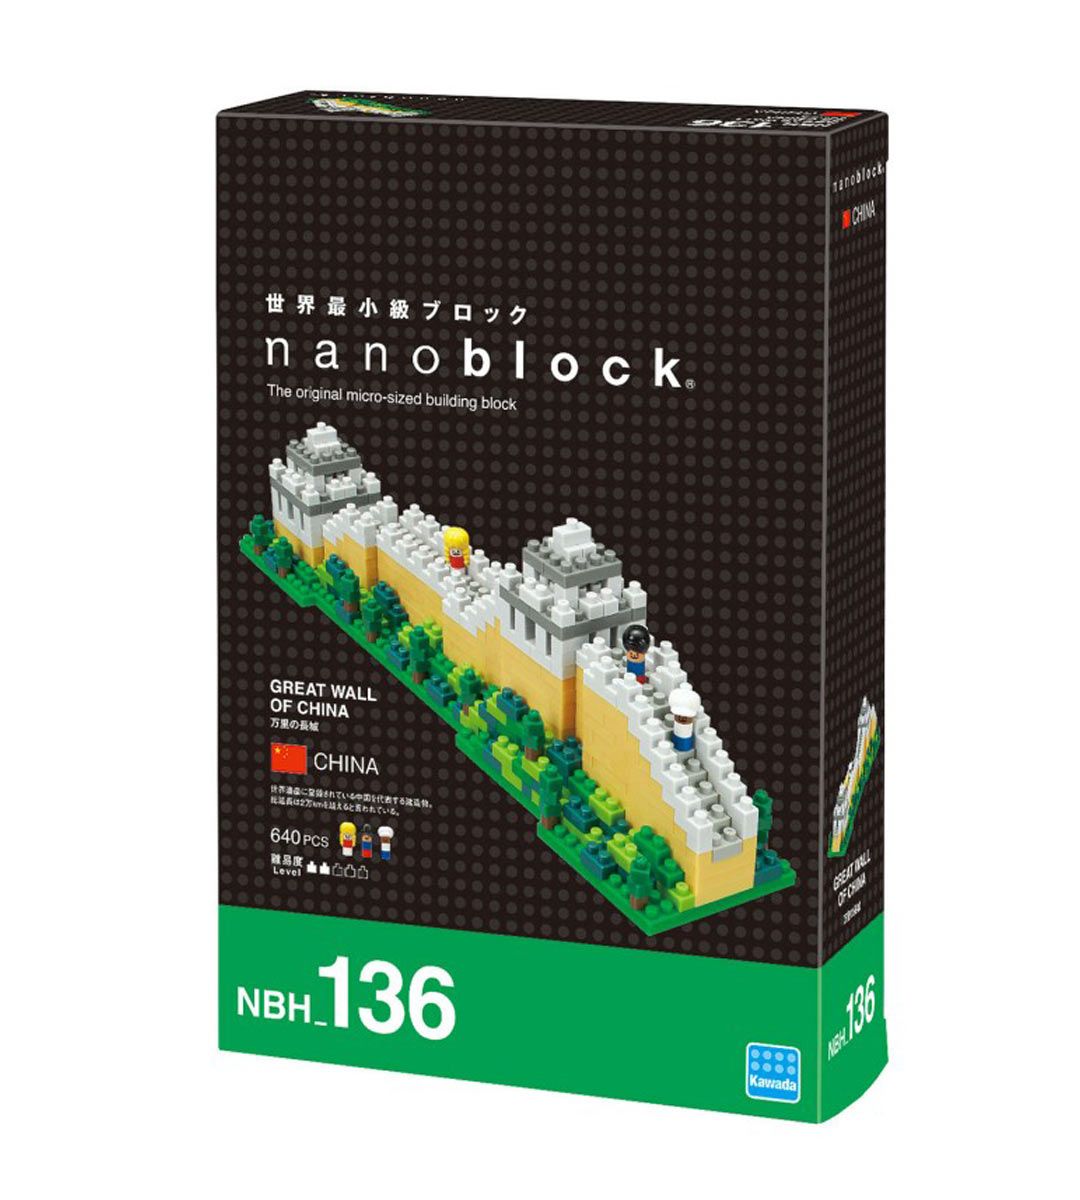 Nanoblock - Great Wall of China